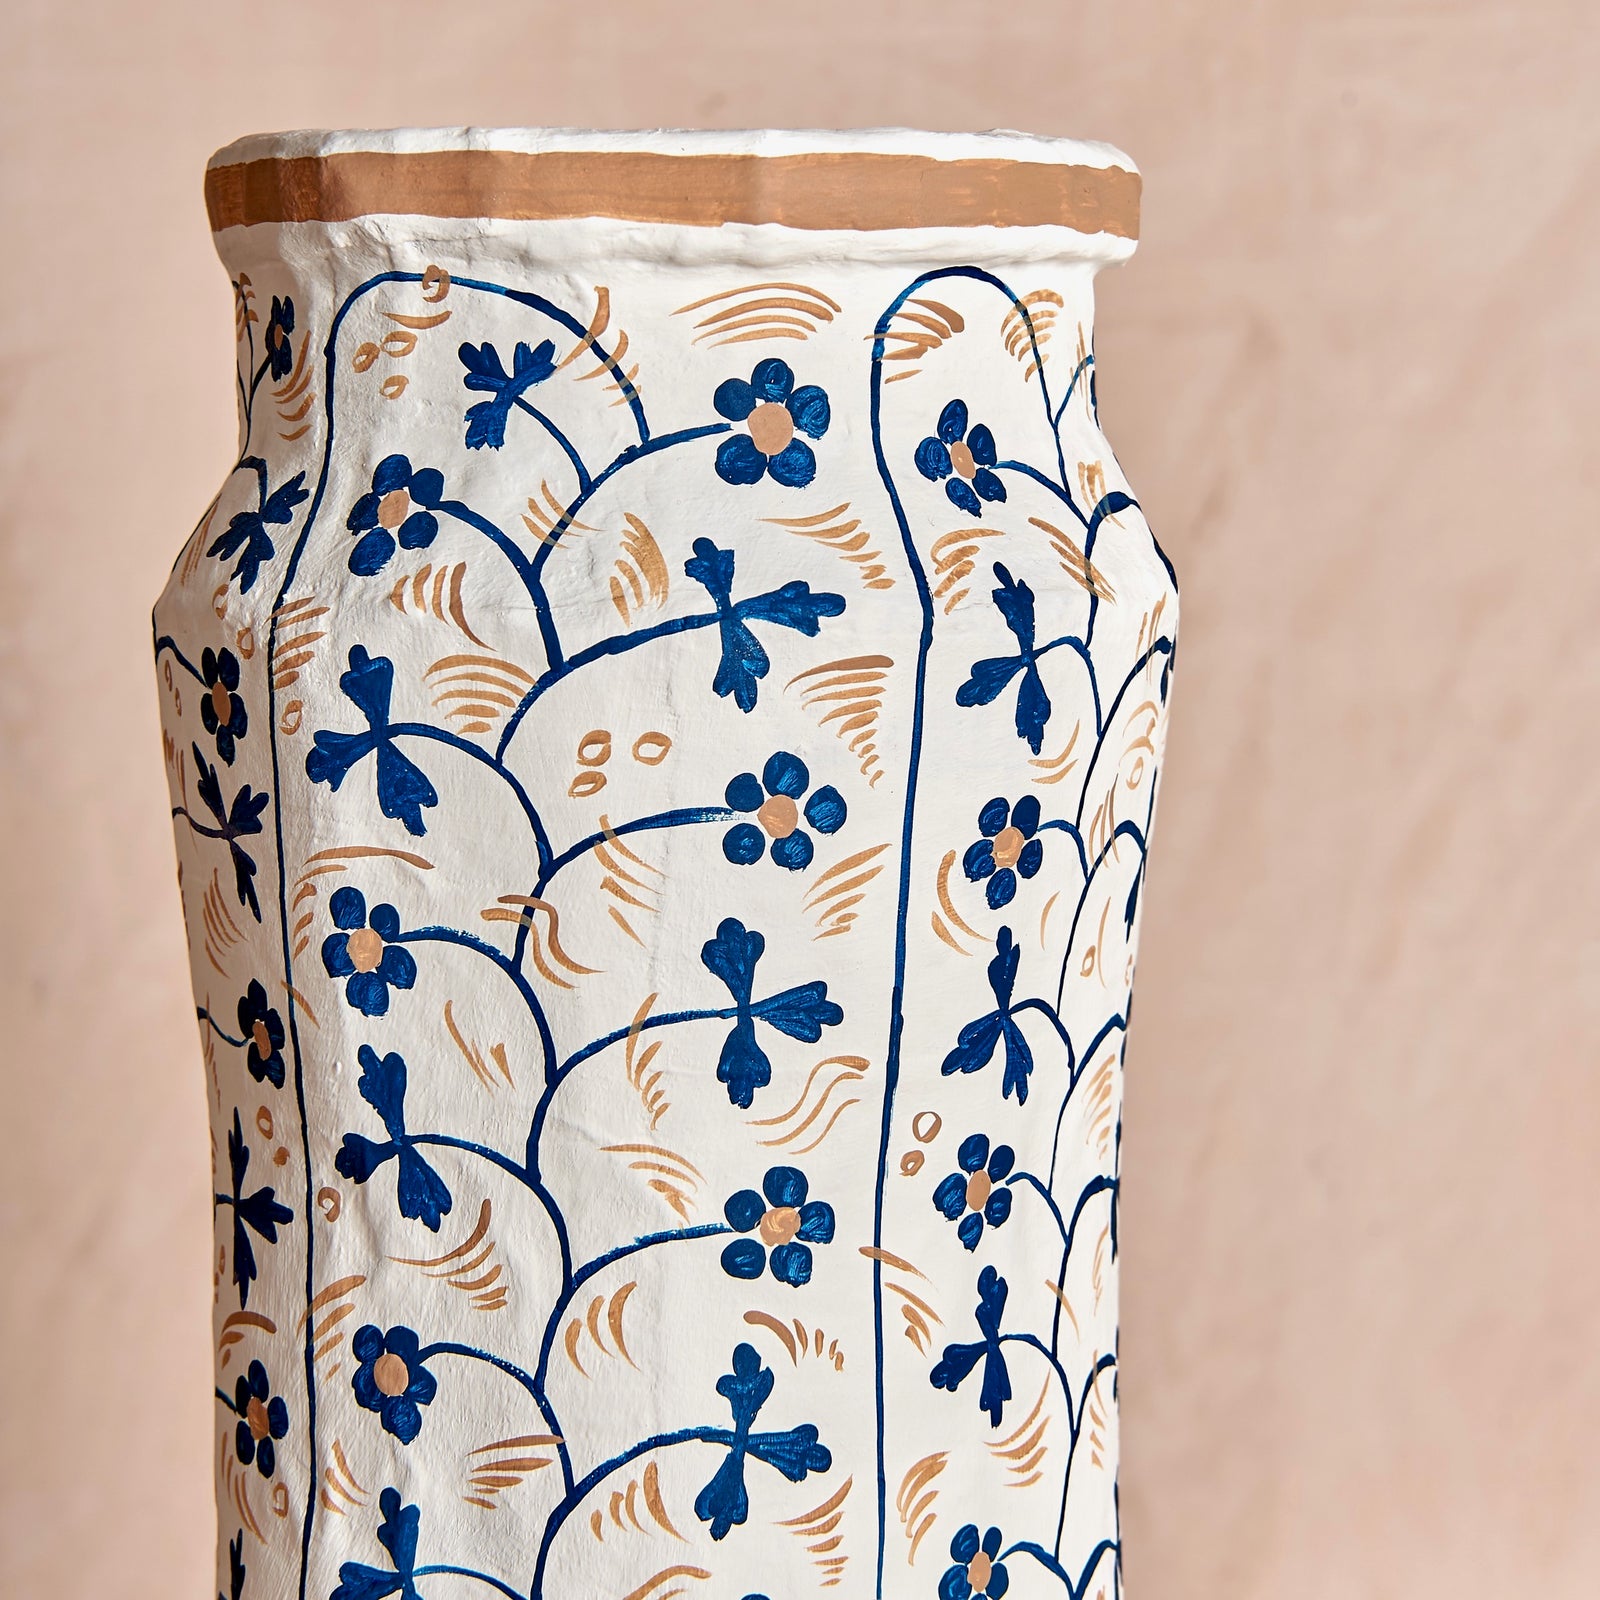 Handmade Papier-mâché Apothecary Jar Vase